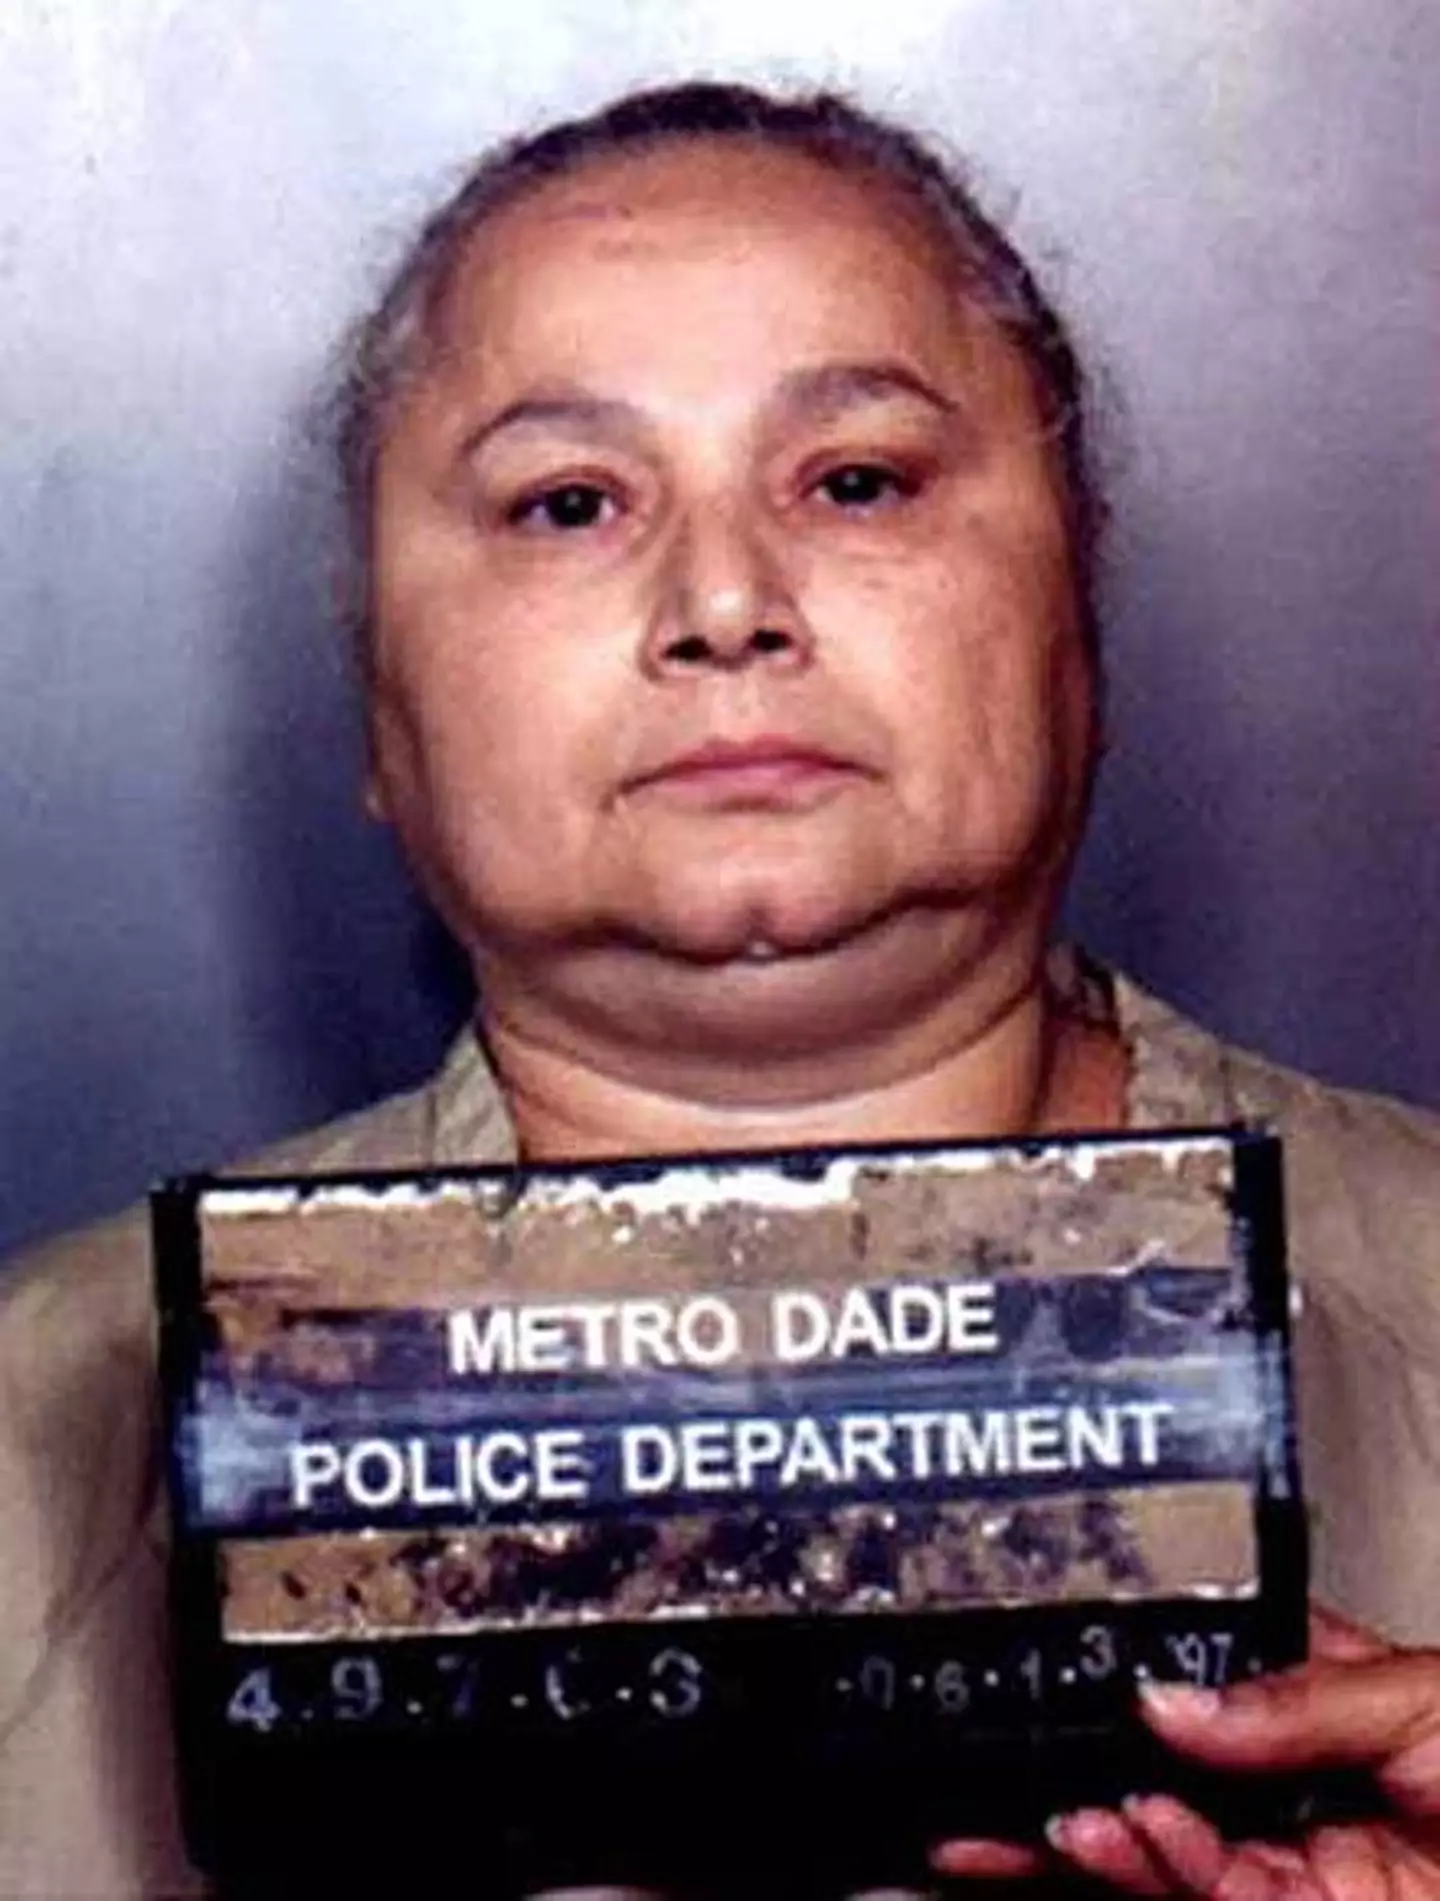 Griselda Blanco's nickname was 'The Cocaine Grandmother'.